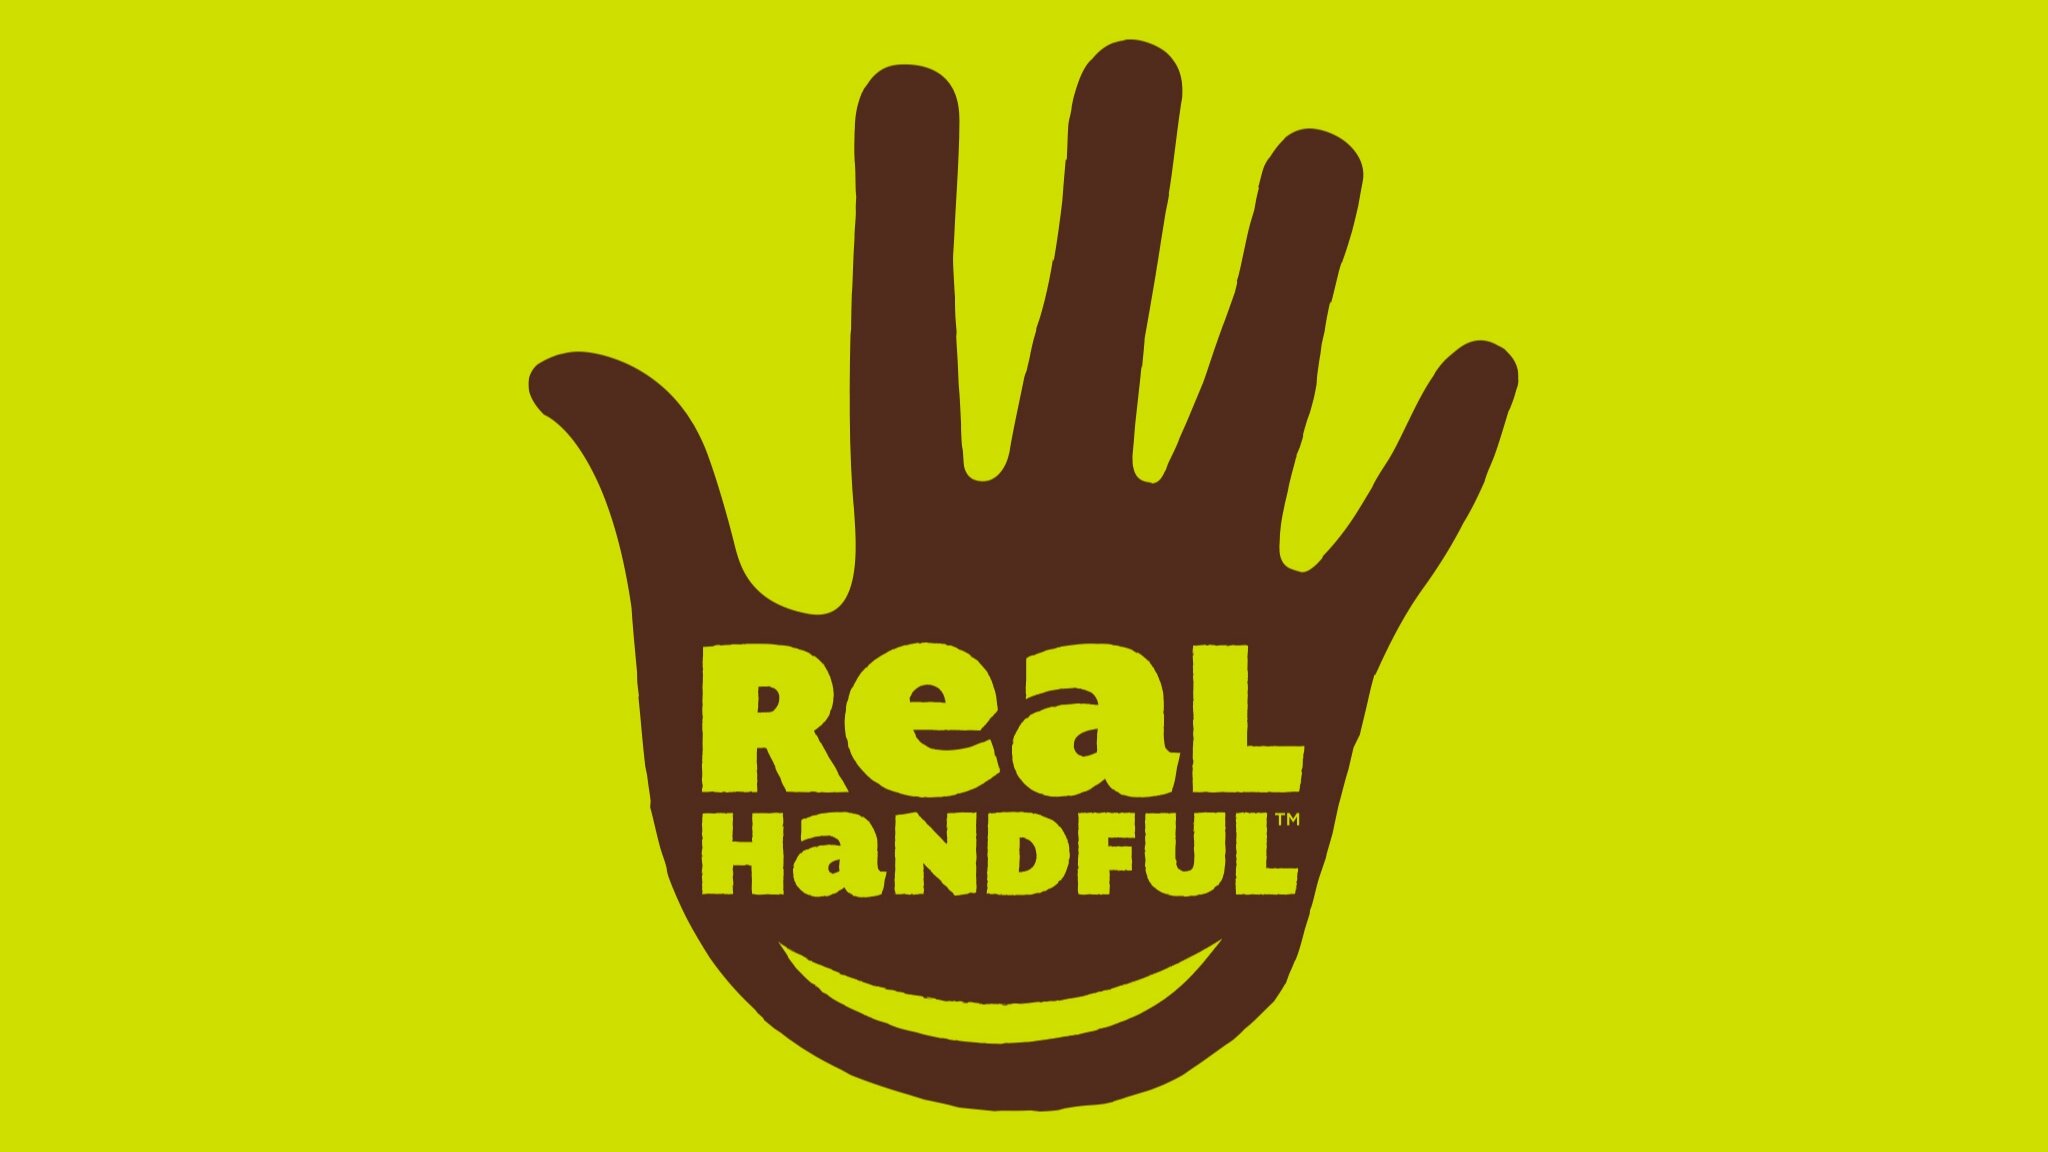 Real Handful Brand Identity